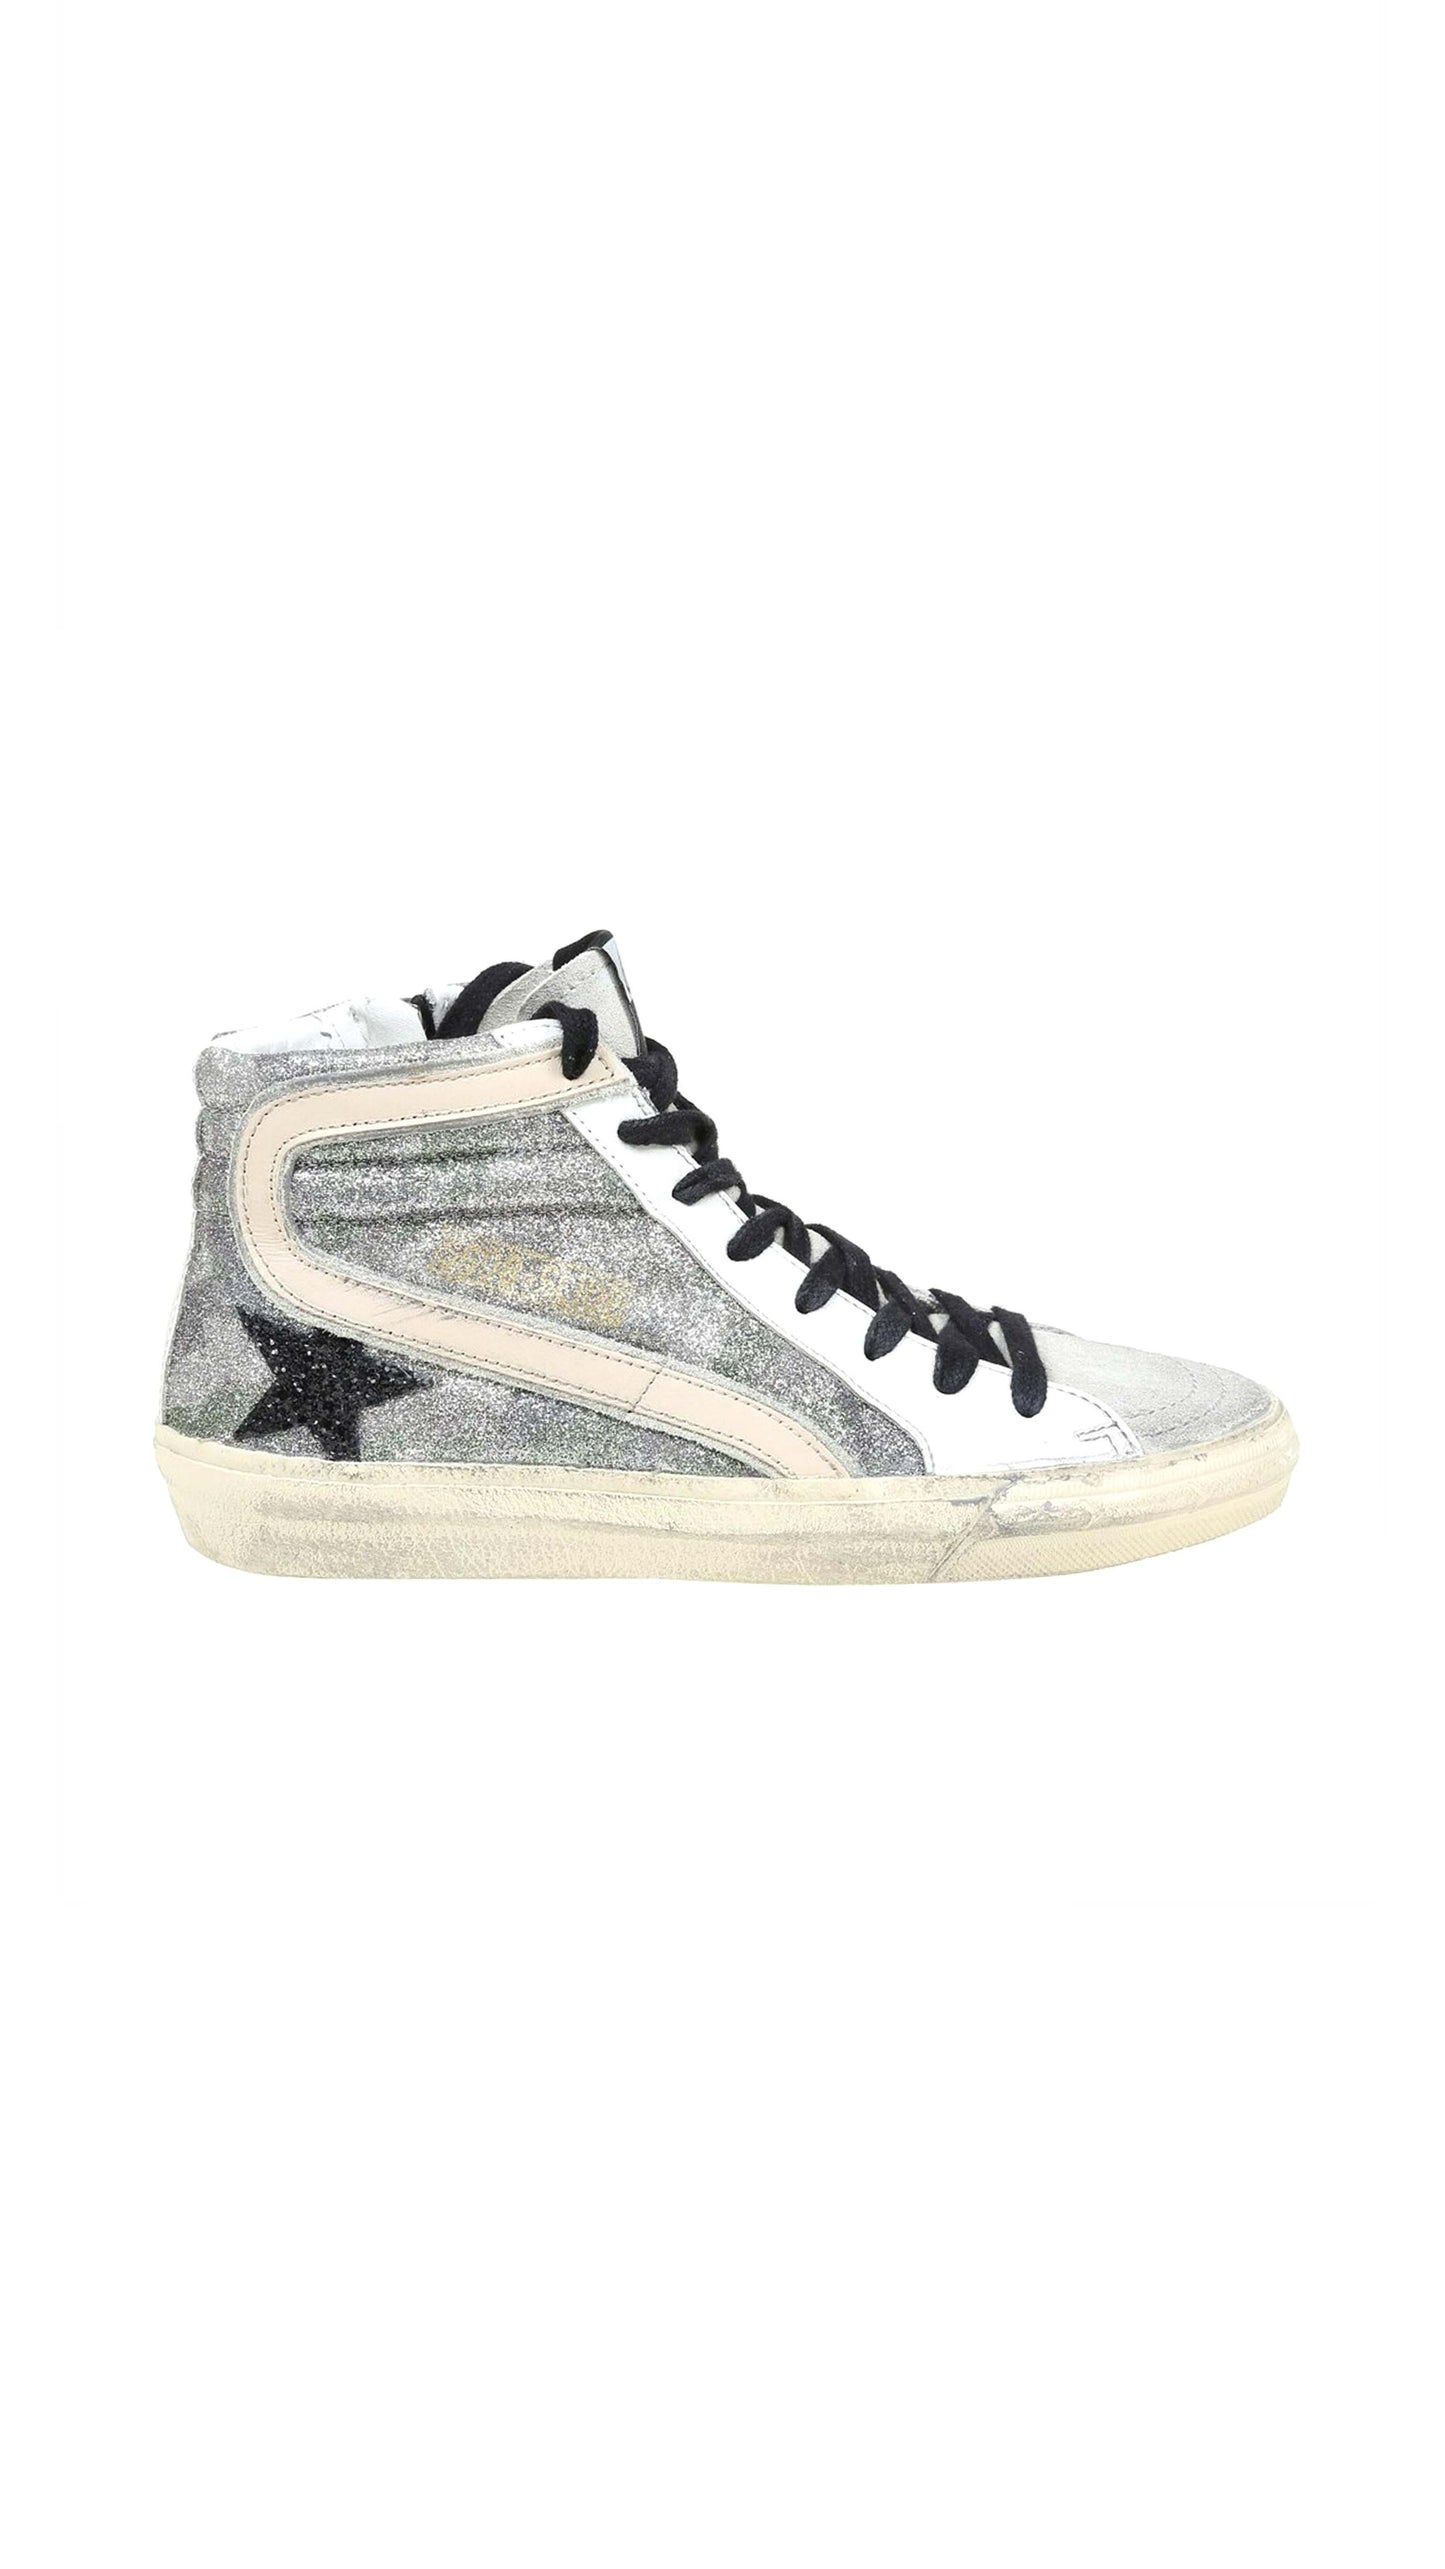 Slide Sneakers - White / Silver